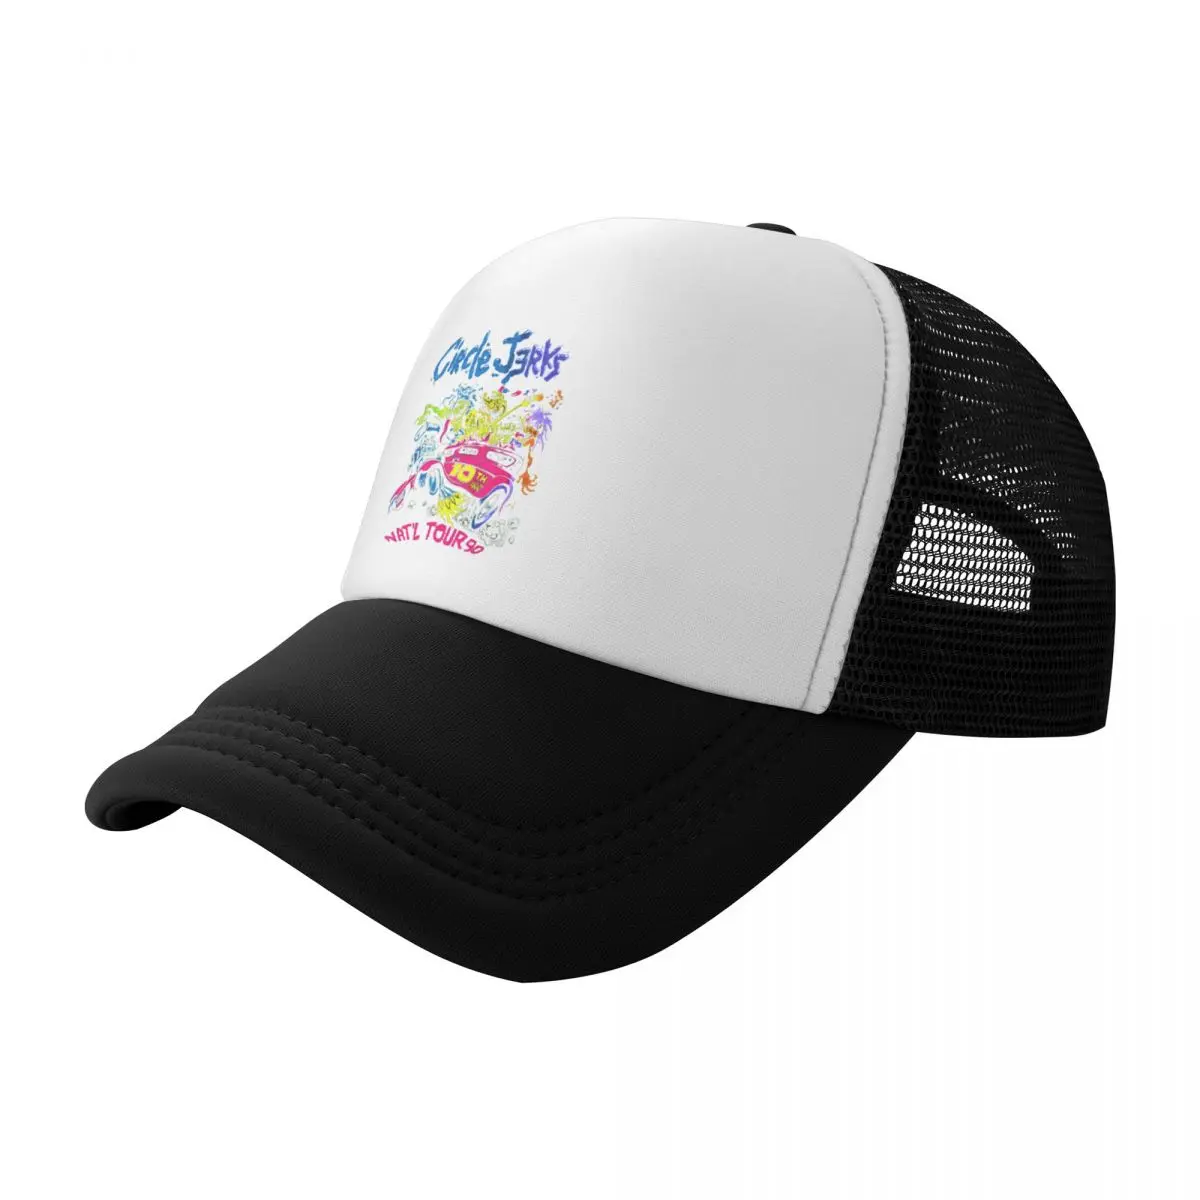 

Nat'l Tour 1990 > Circle Jerks Trending Zipped Hoodie Baseball Cap Big Size Hat Anime Hat Caps For Men Women's